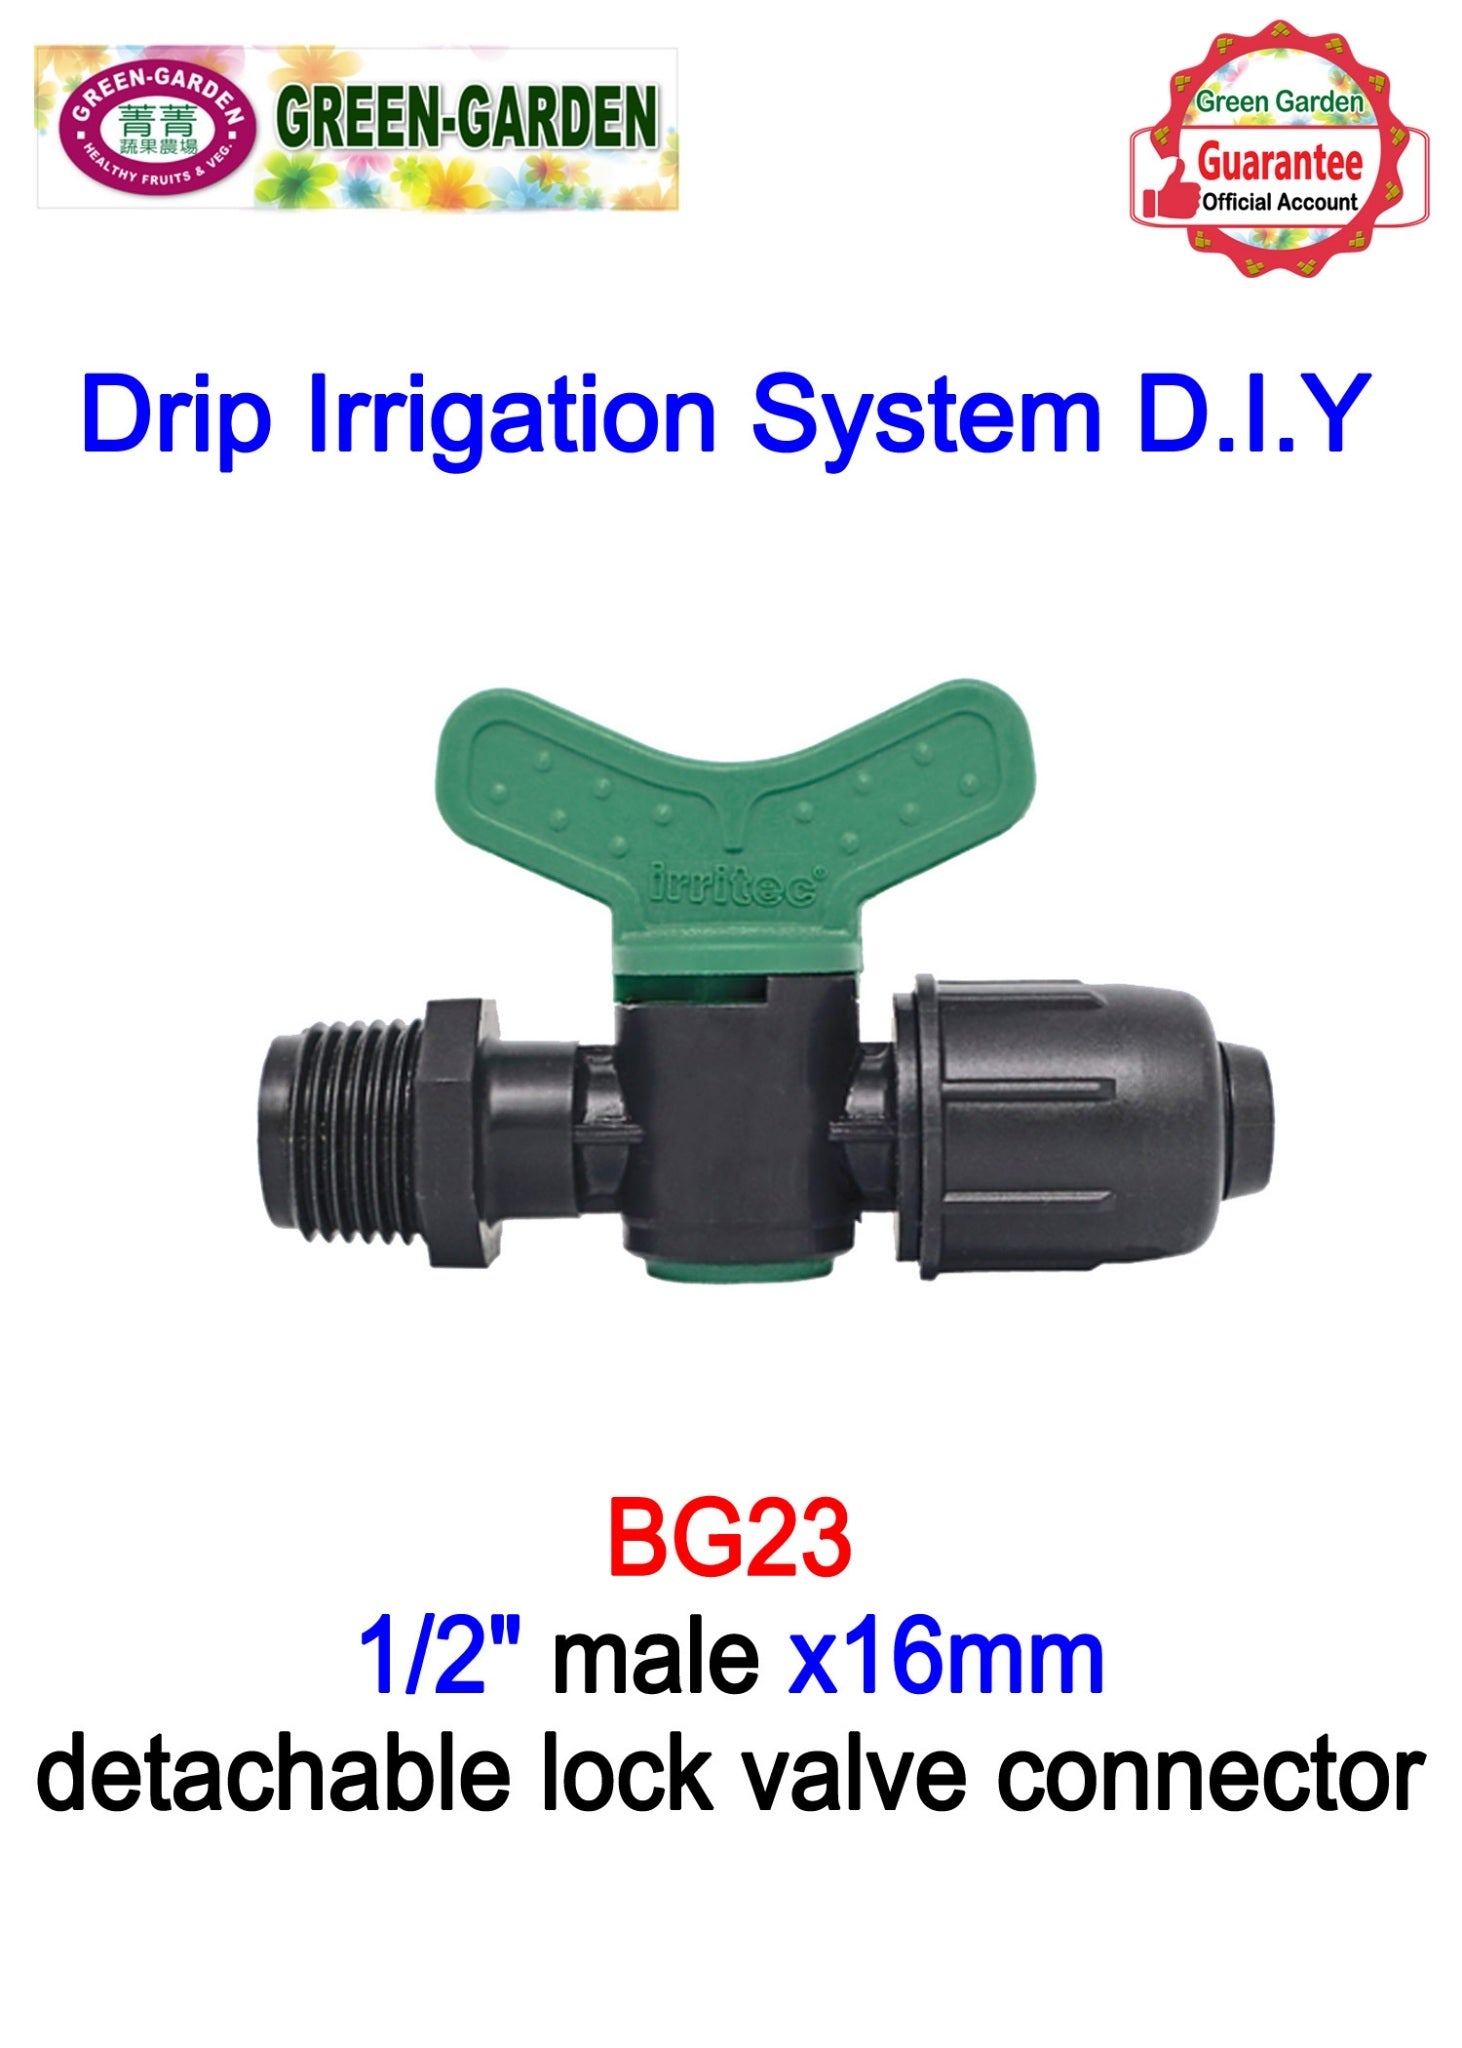 Drip Irrigation System - 1/2"male x16mm detachable lock valve connector BG23